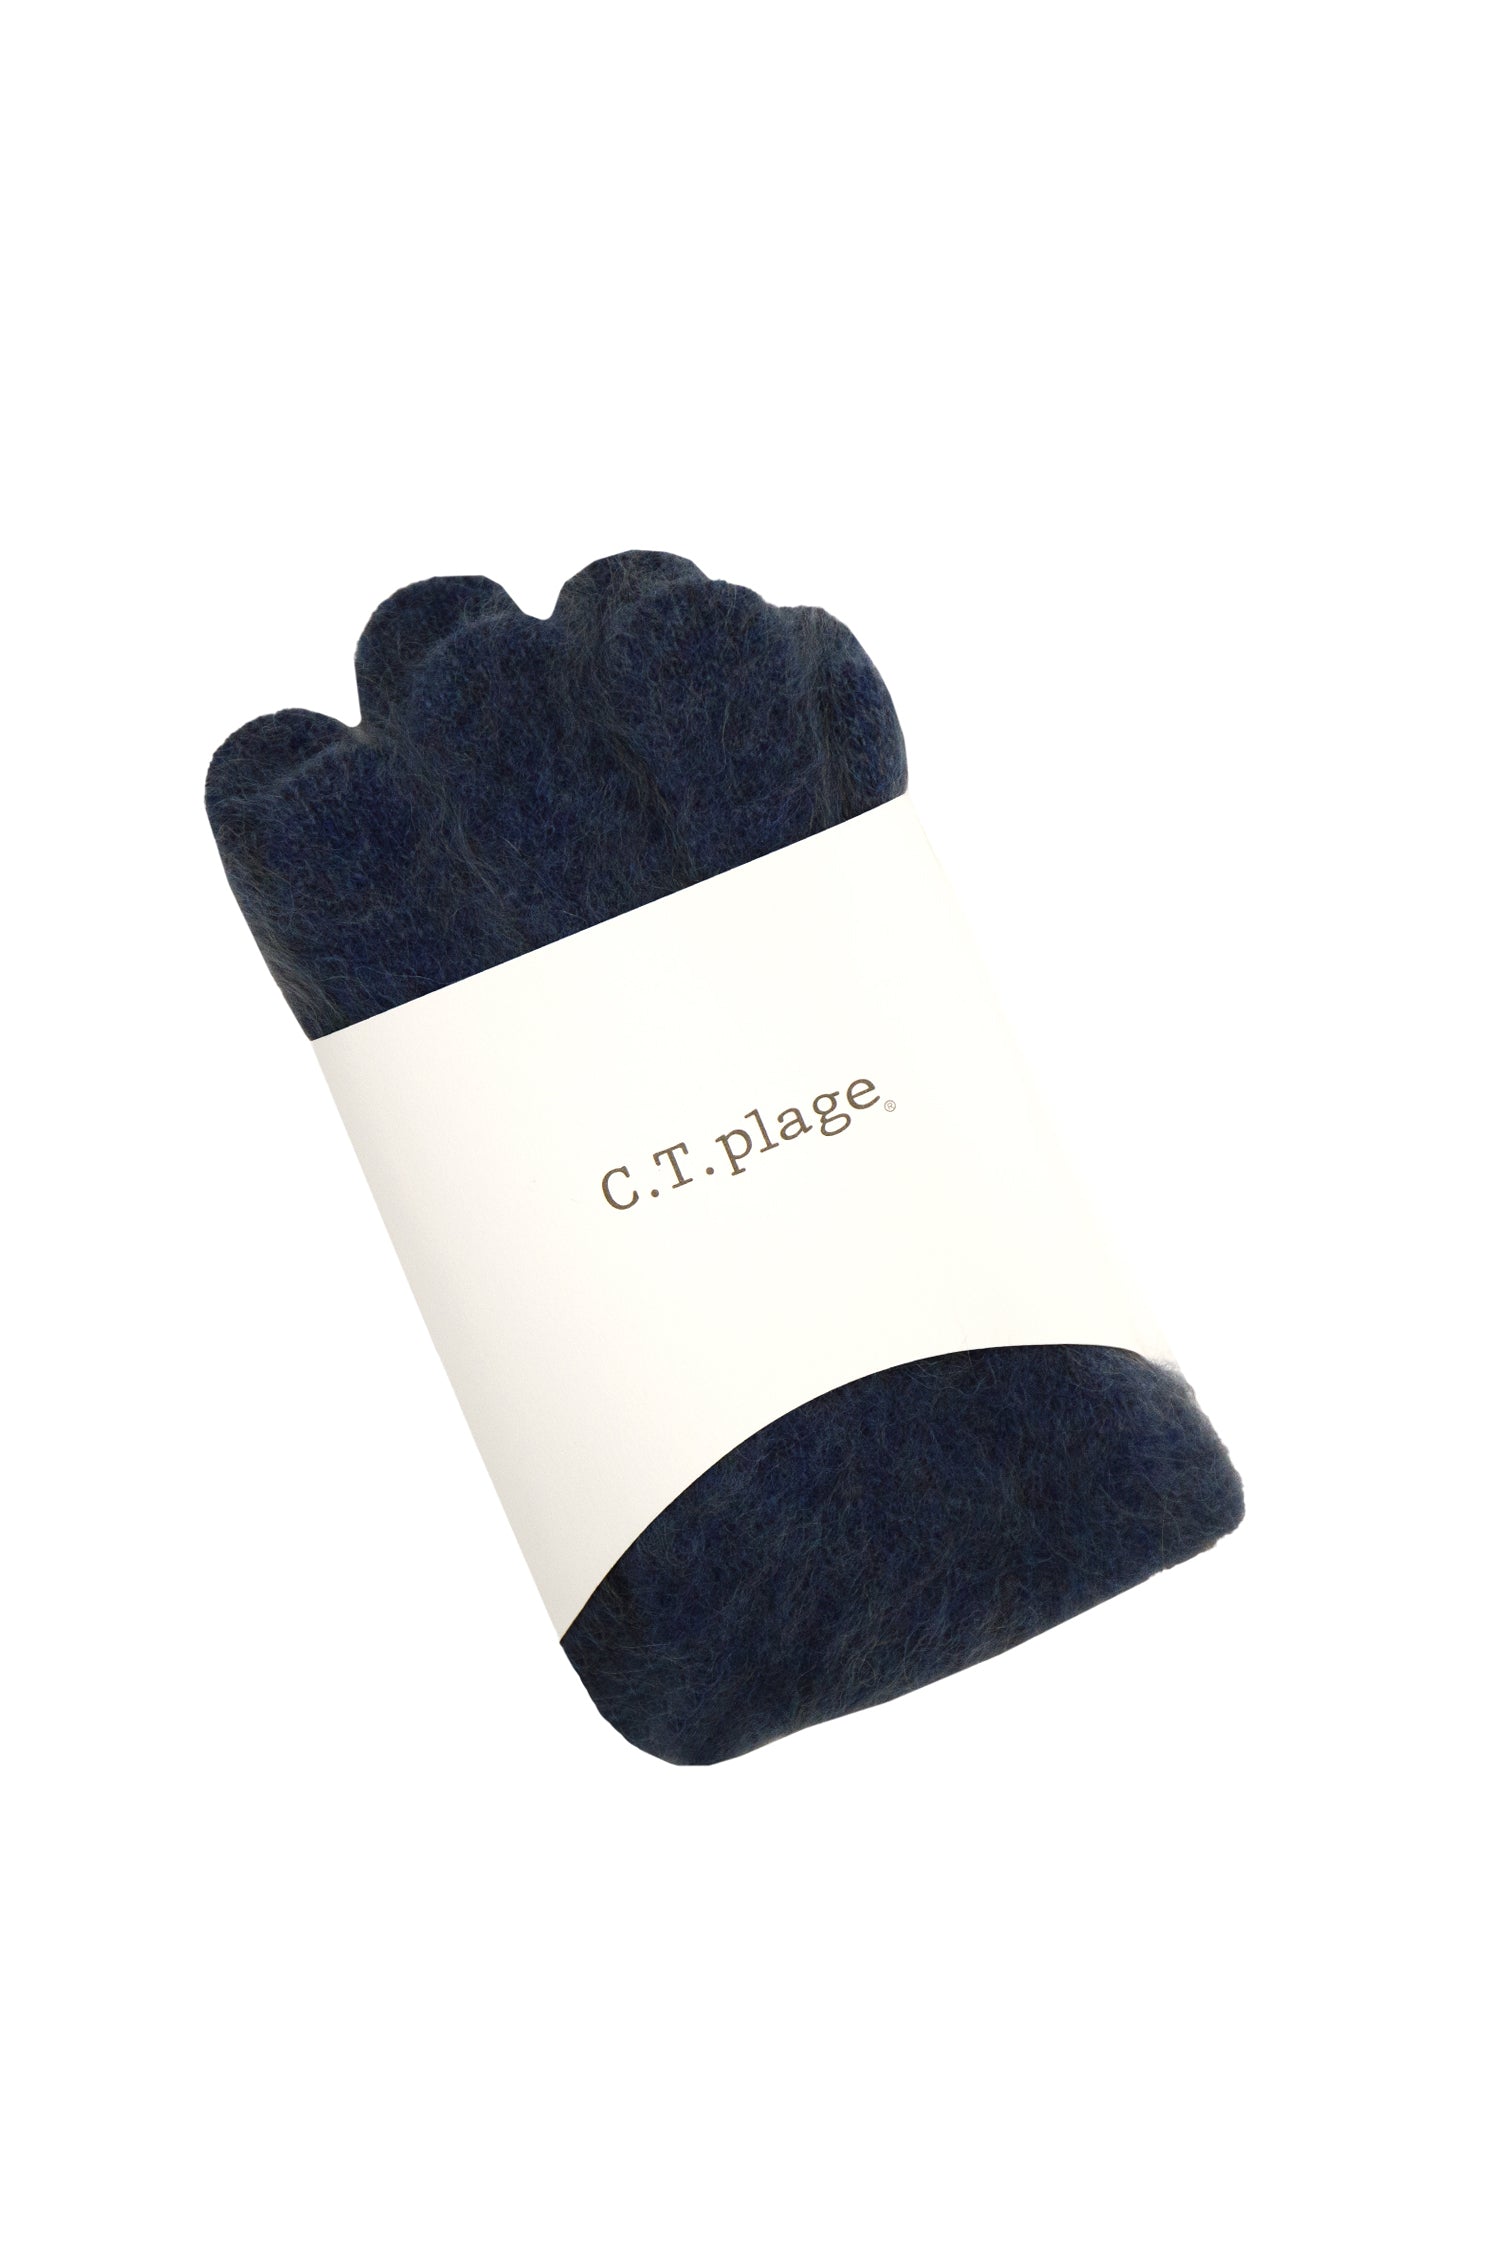 Raccoon gloves/ 5549 – C.T.plage